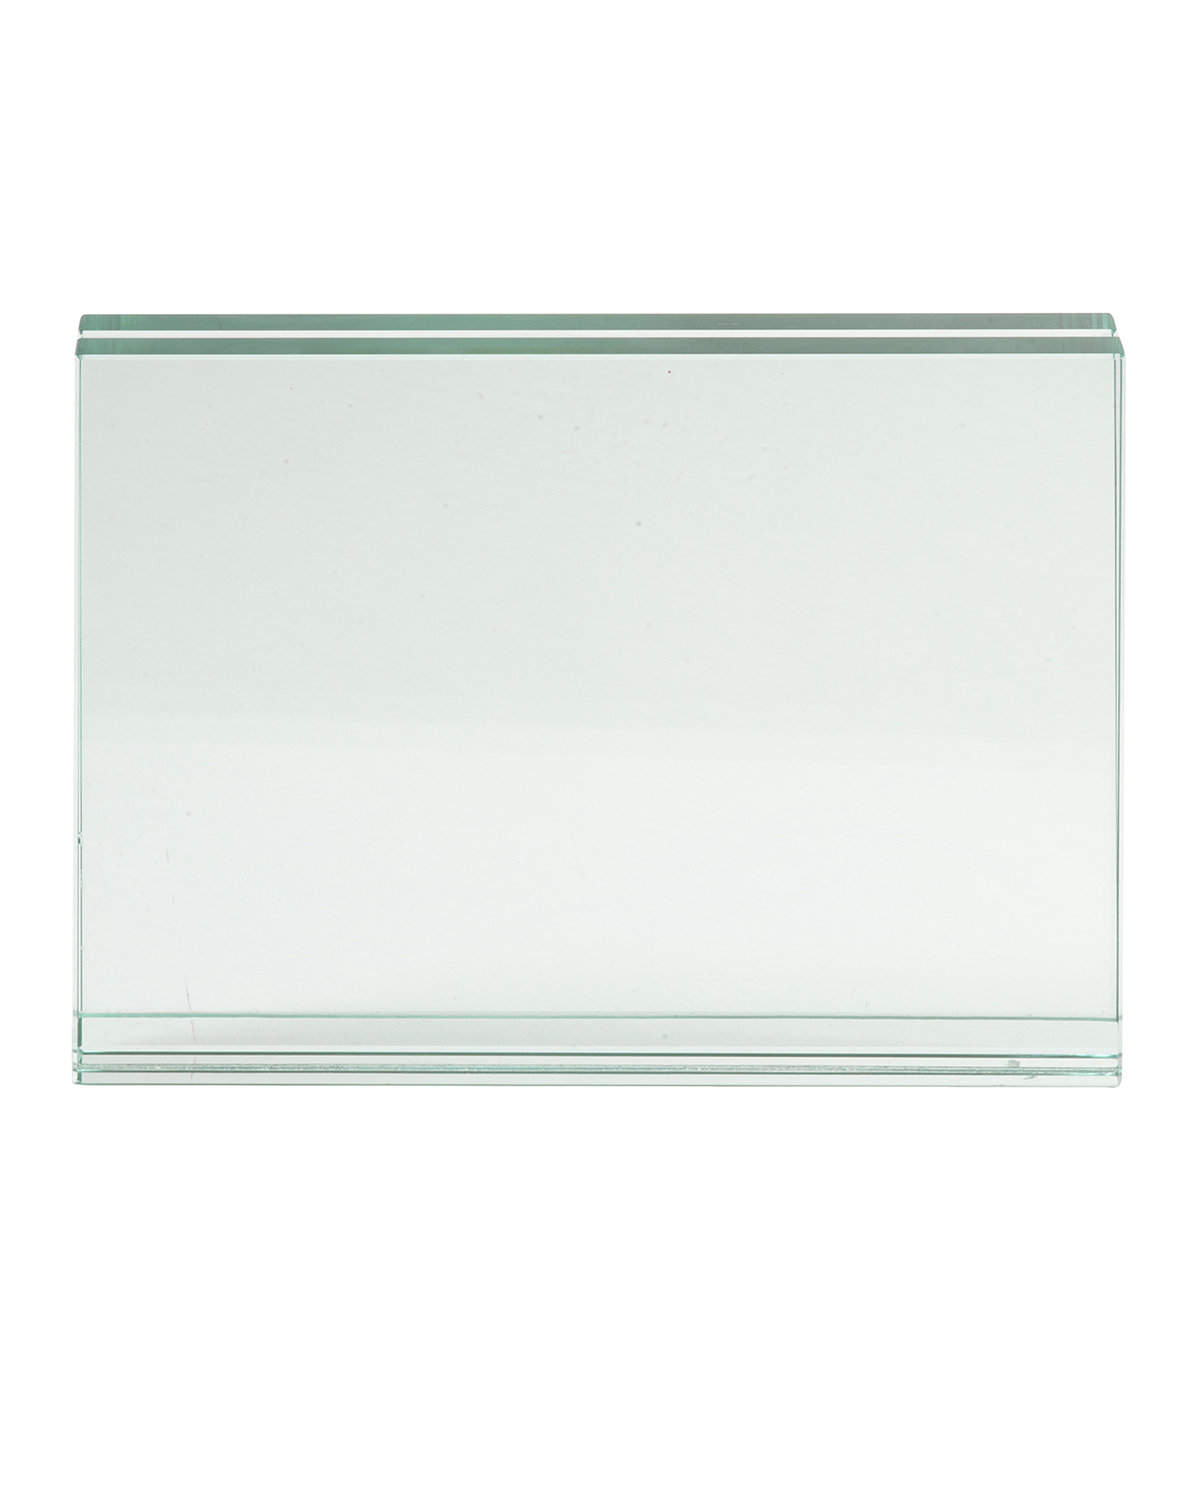 Atrium Glass Large Desk Photo Frame-Leeman